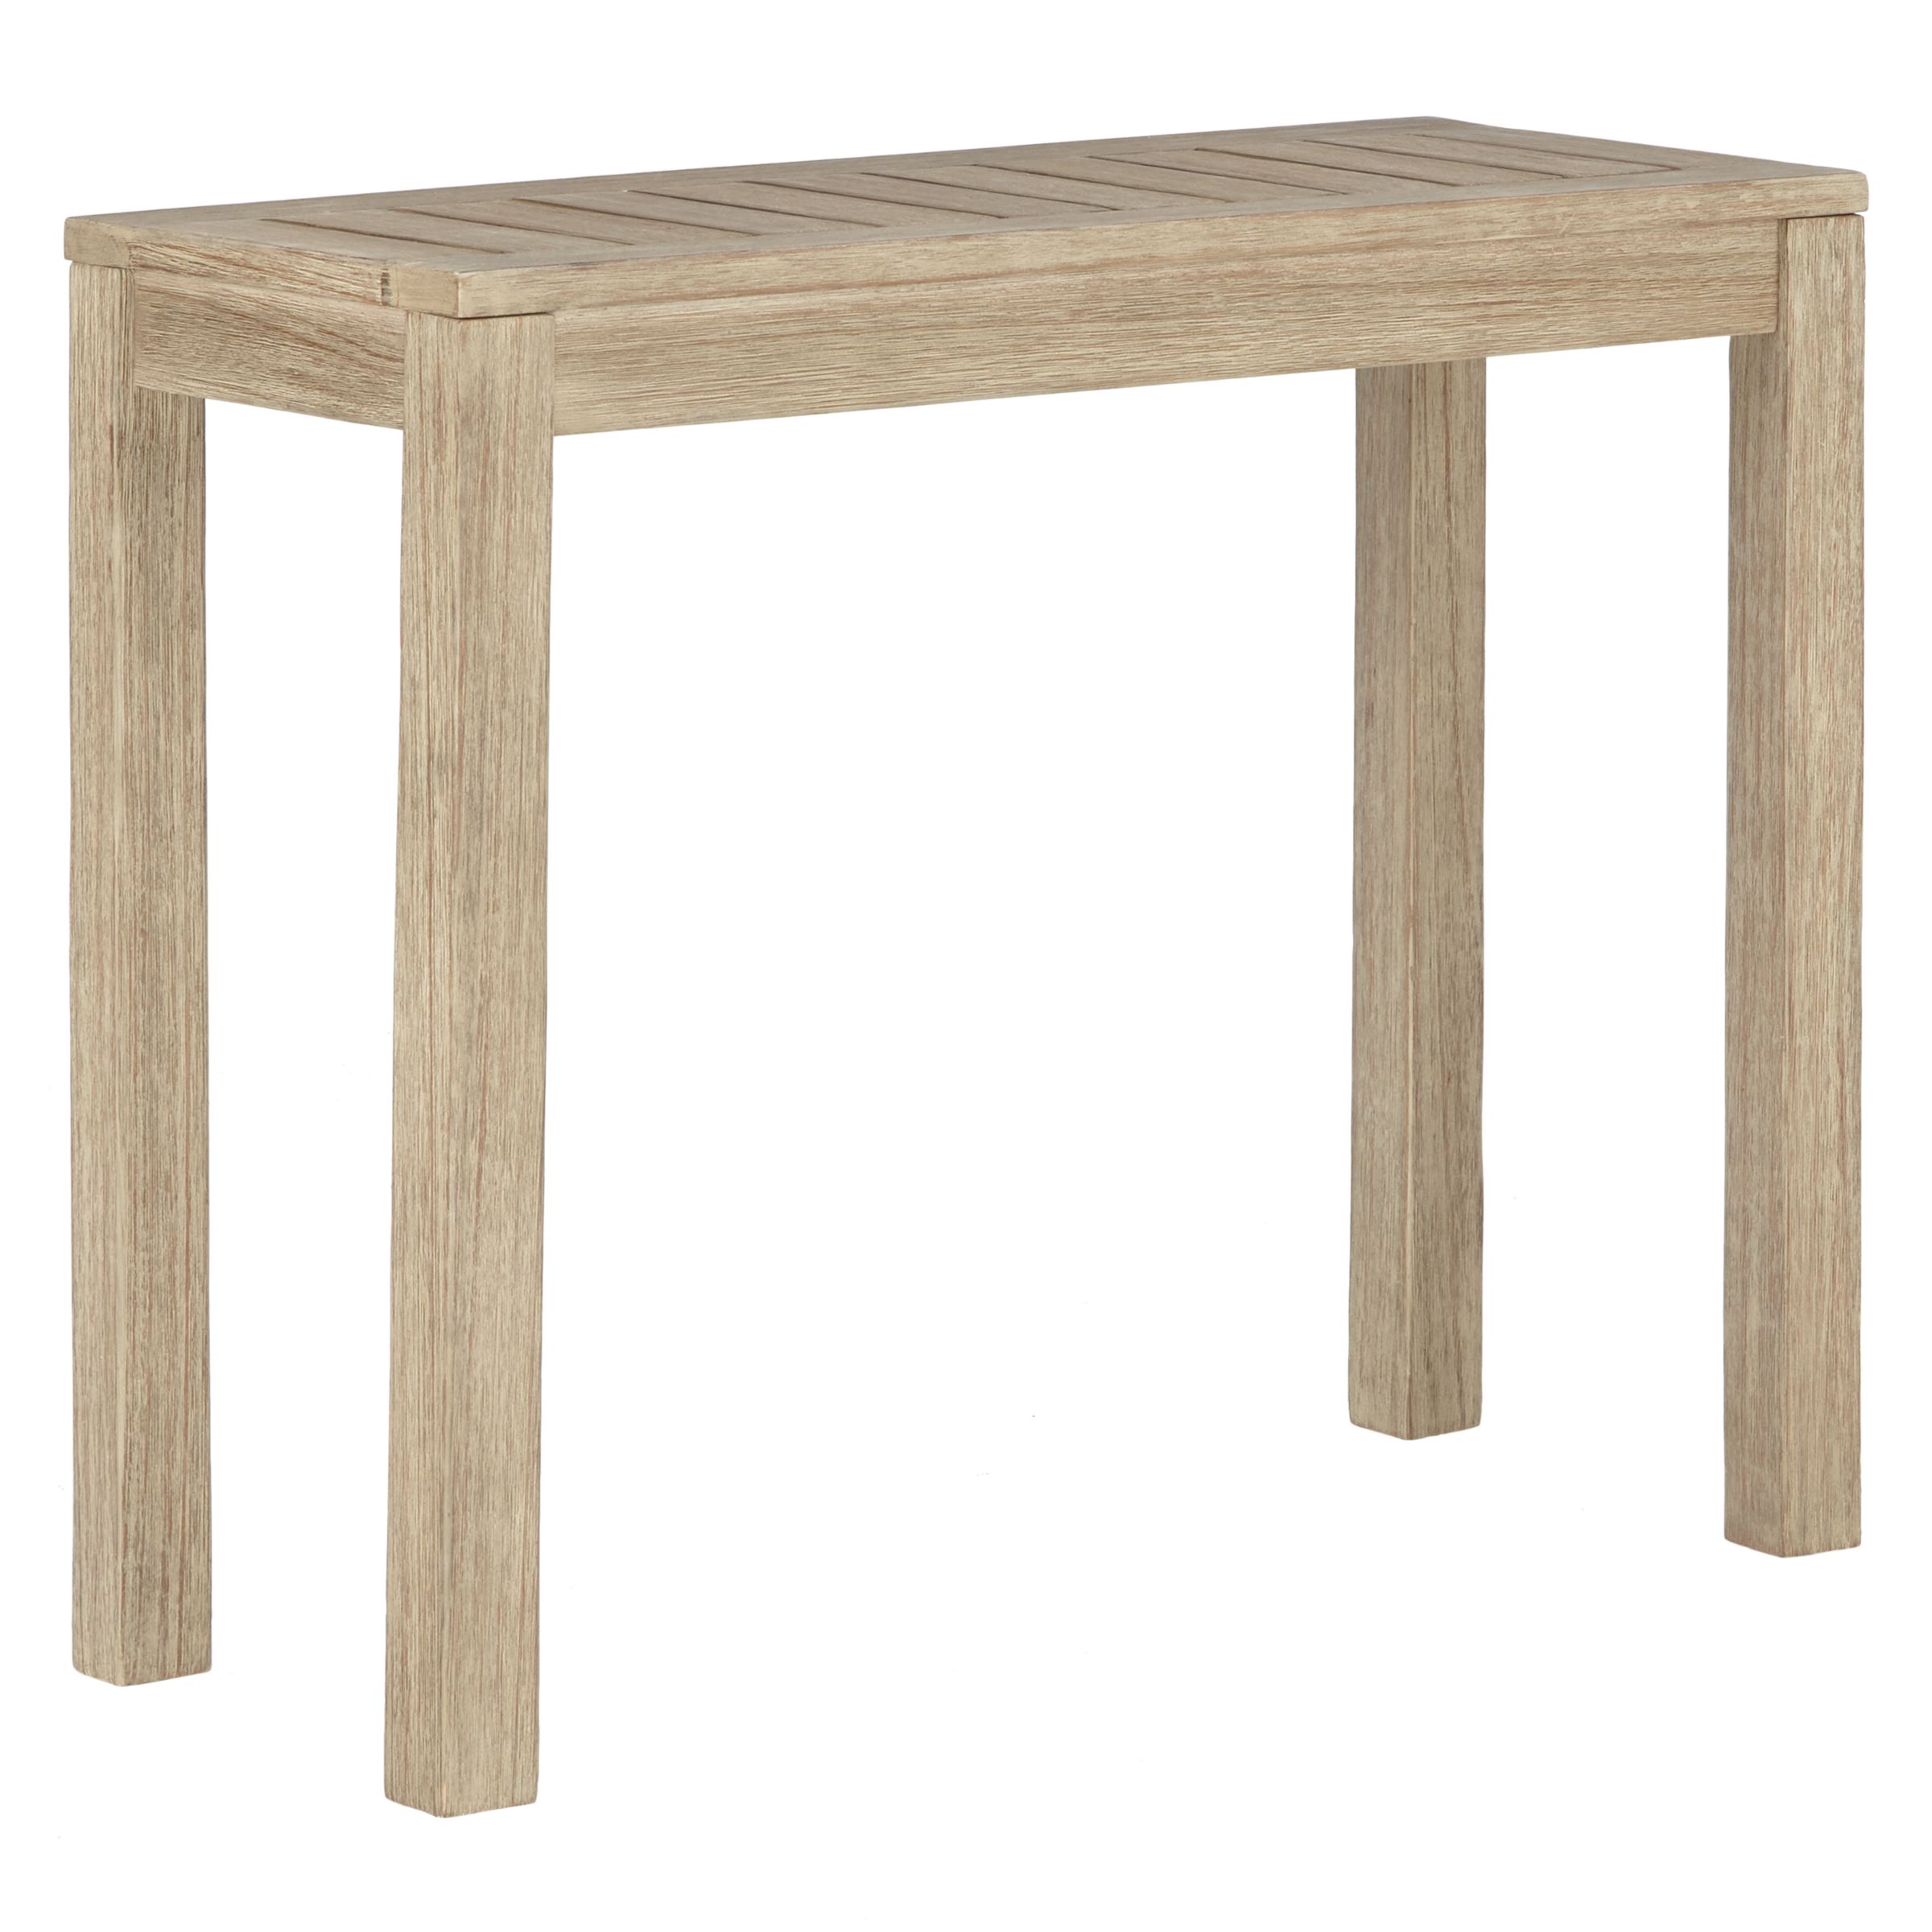 John Lewis St Ives Garden Side Table, FSC-Certified (Eucalyptus Wood), Natural